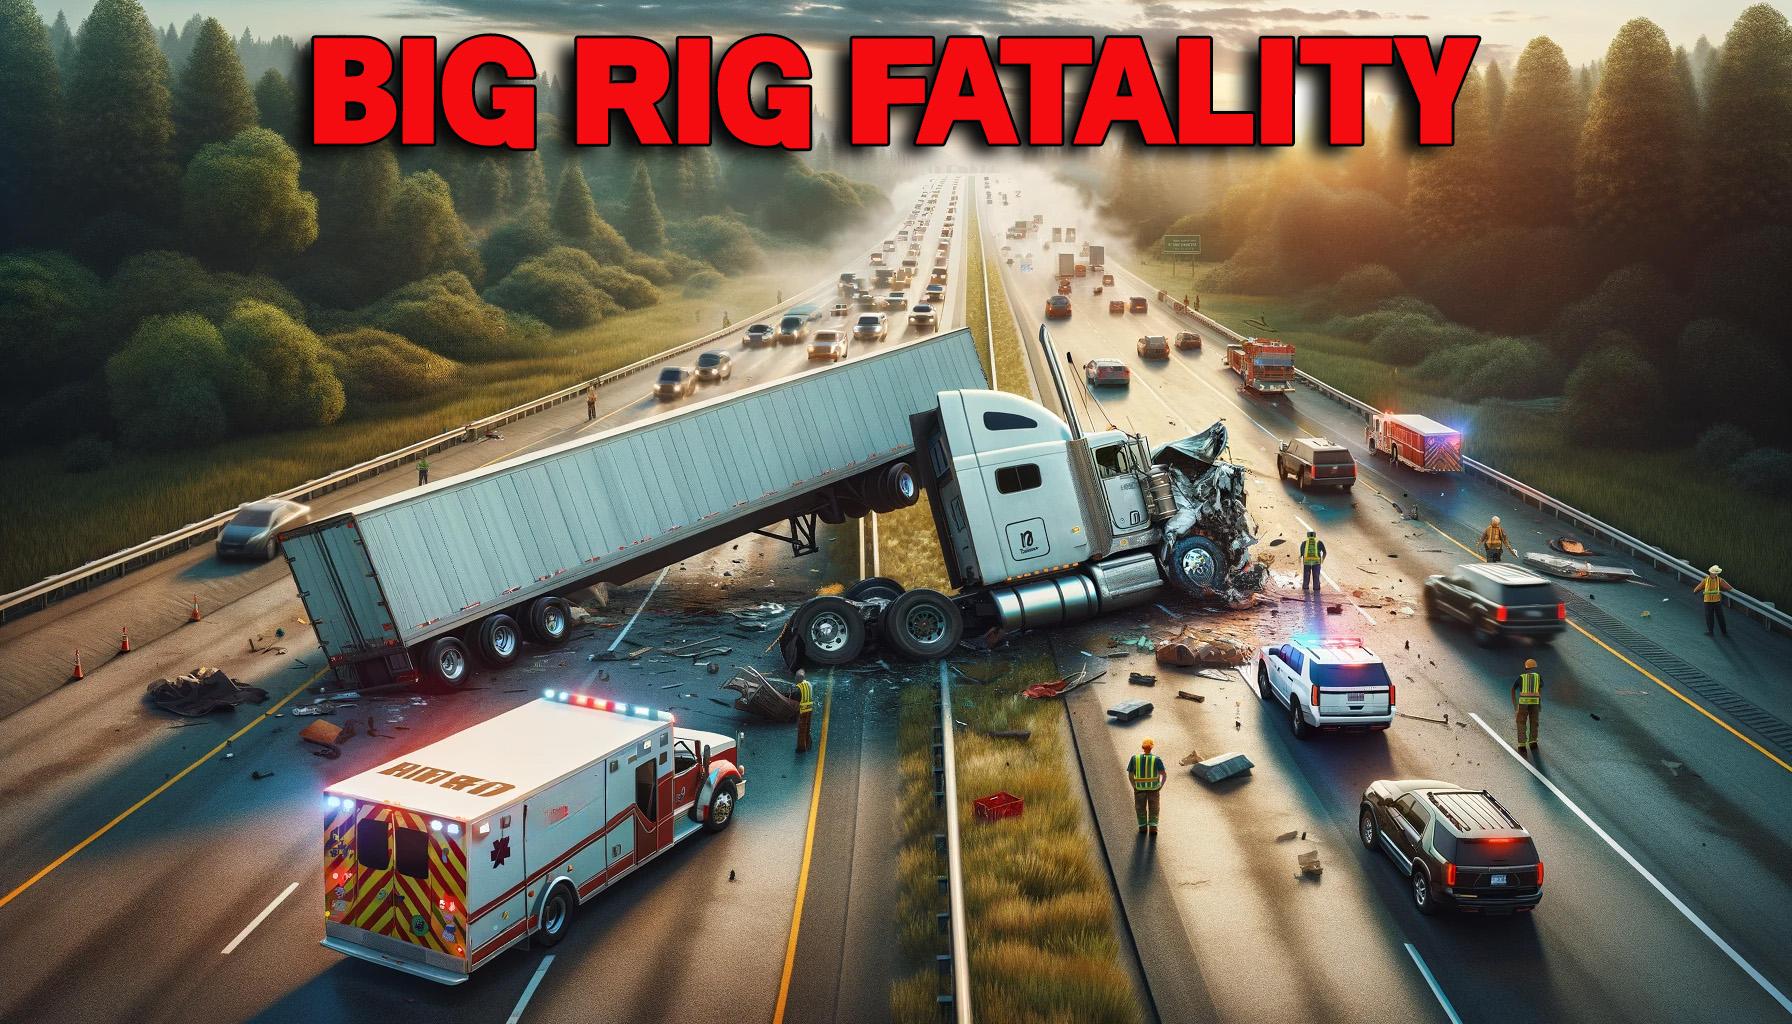 Big Rig Fatality news graphic